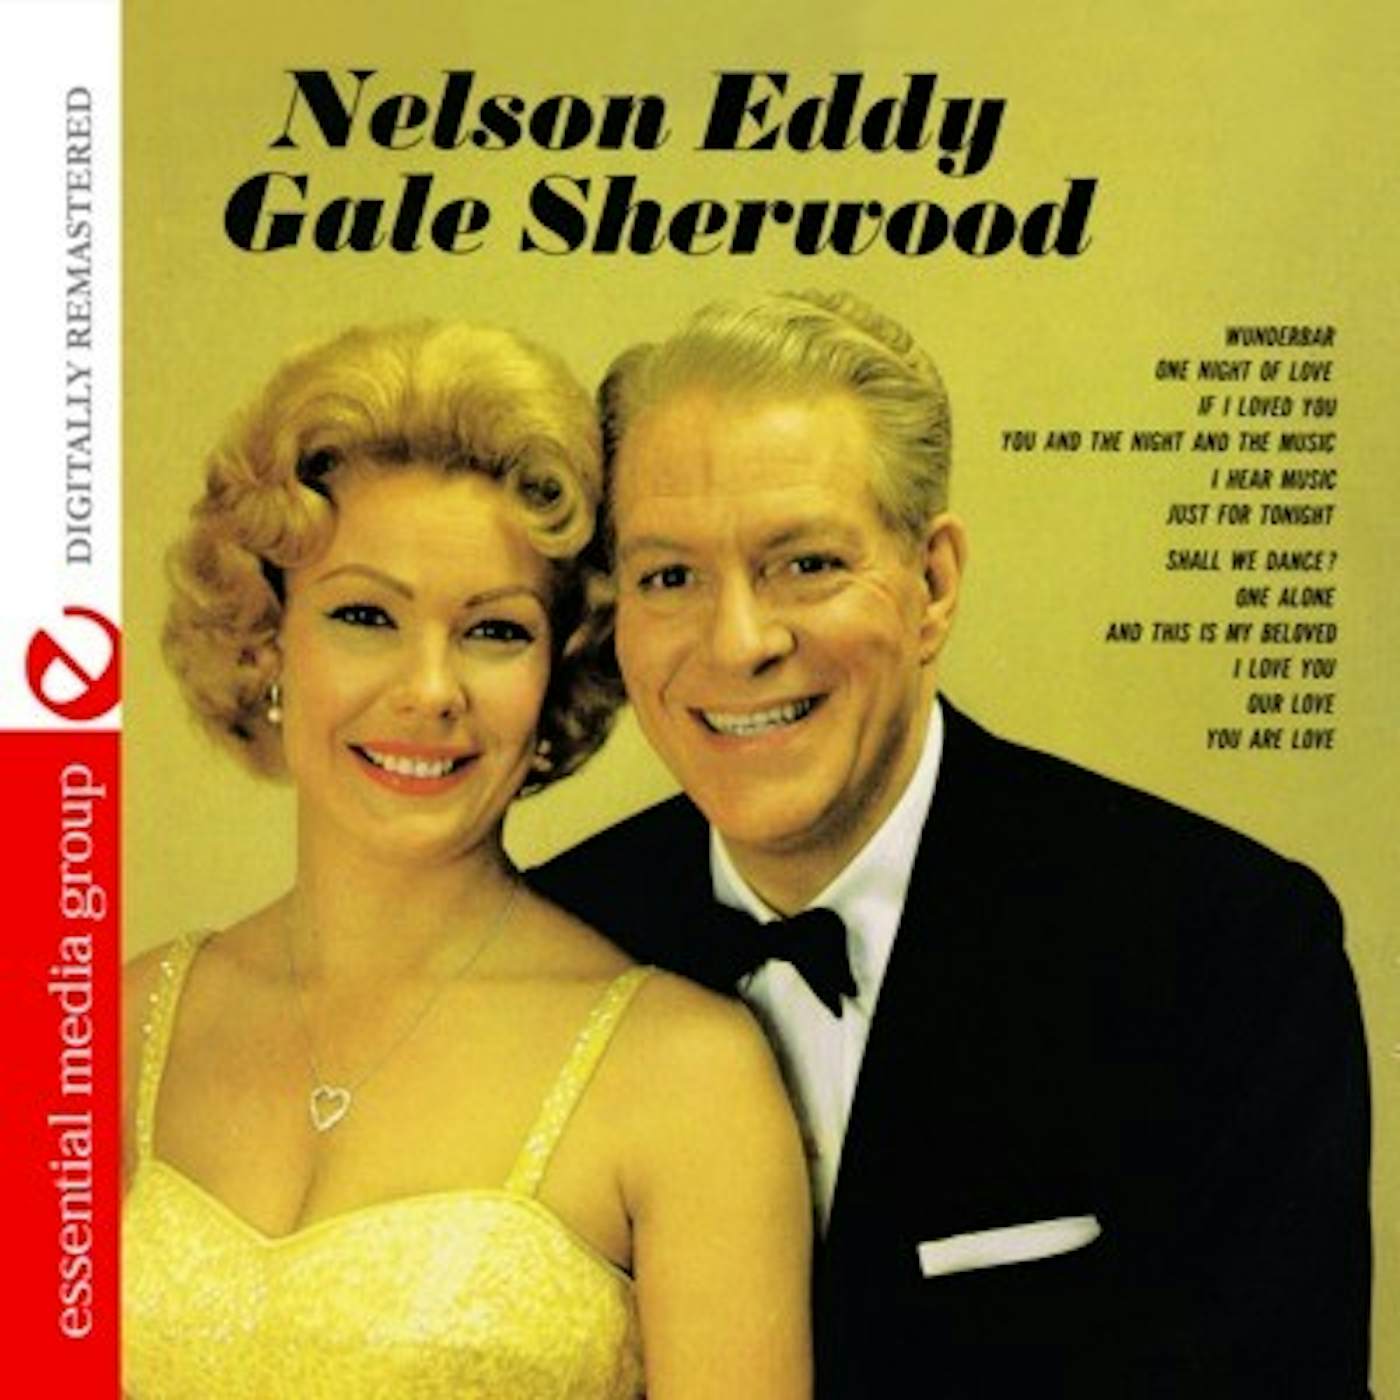 NELSON EDDY & GALE SHERWOOD CD